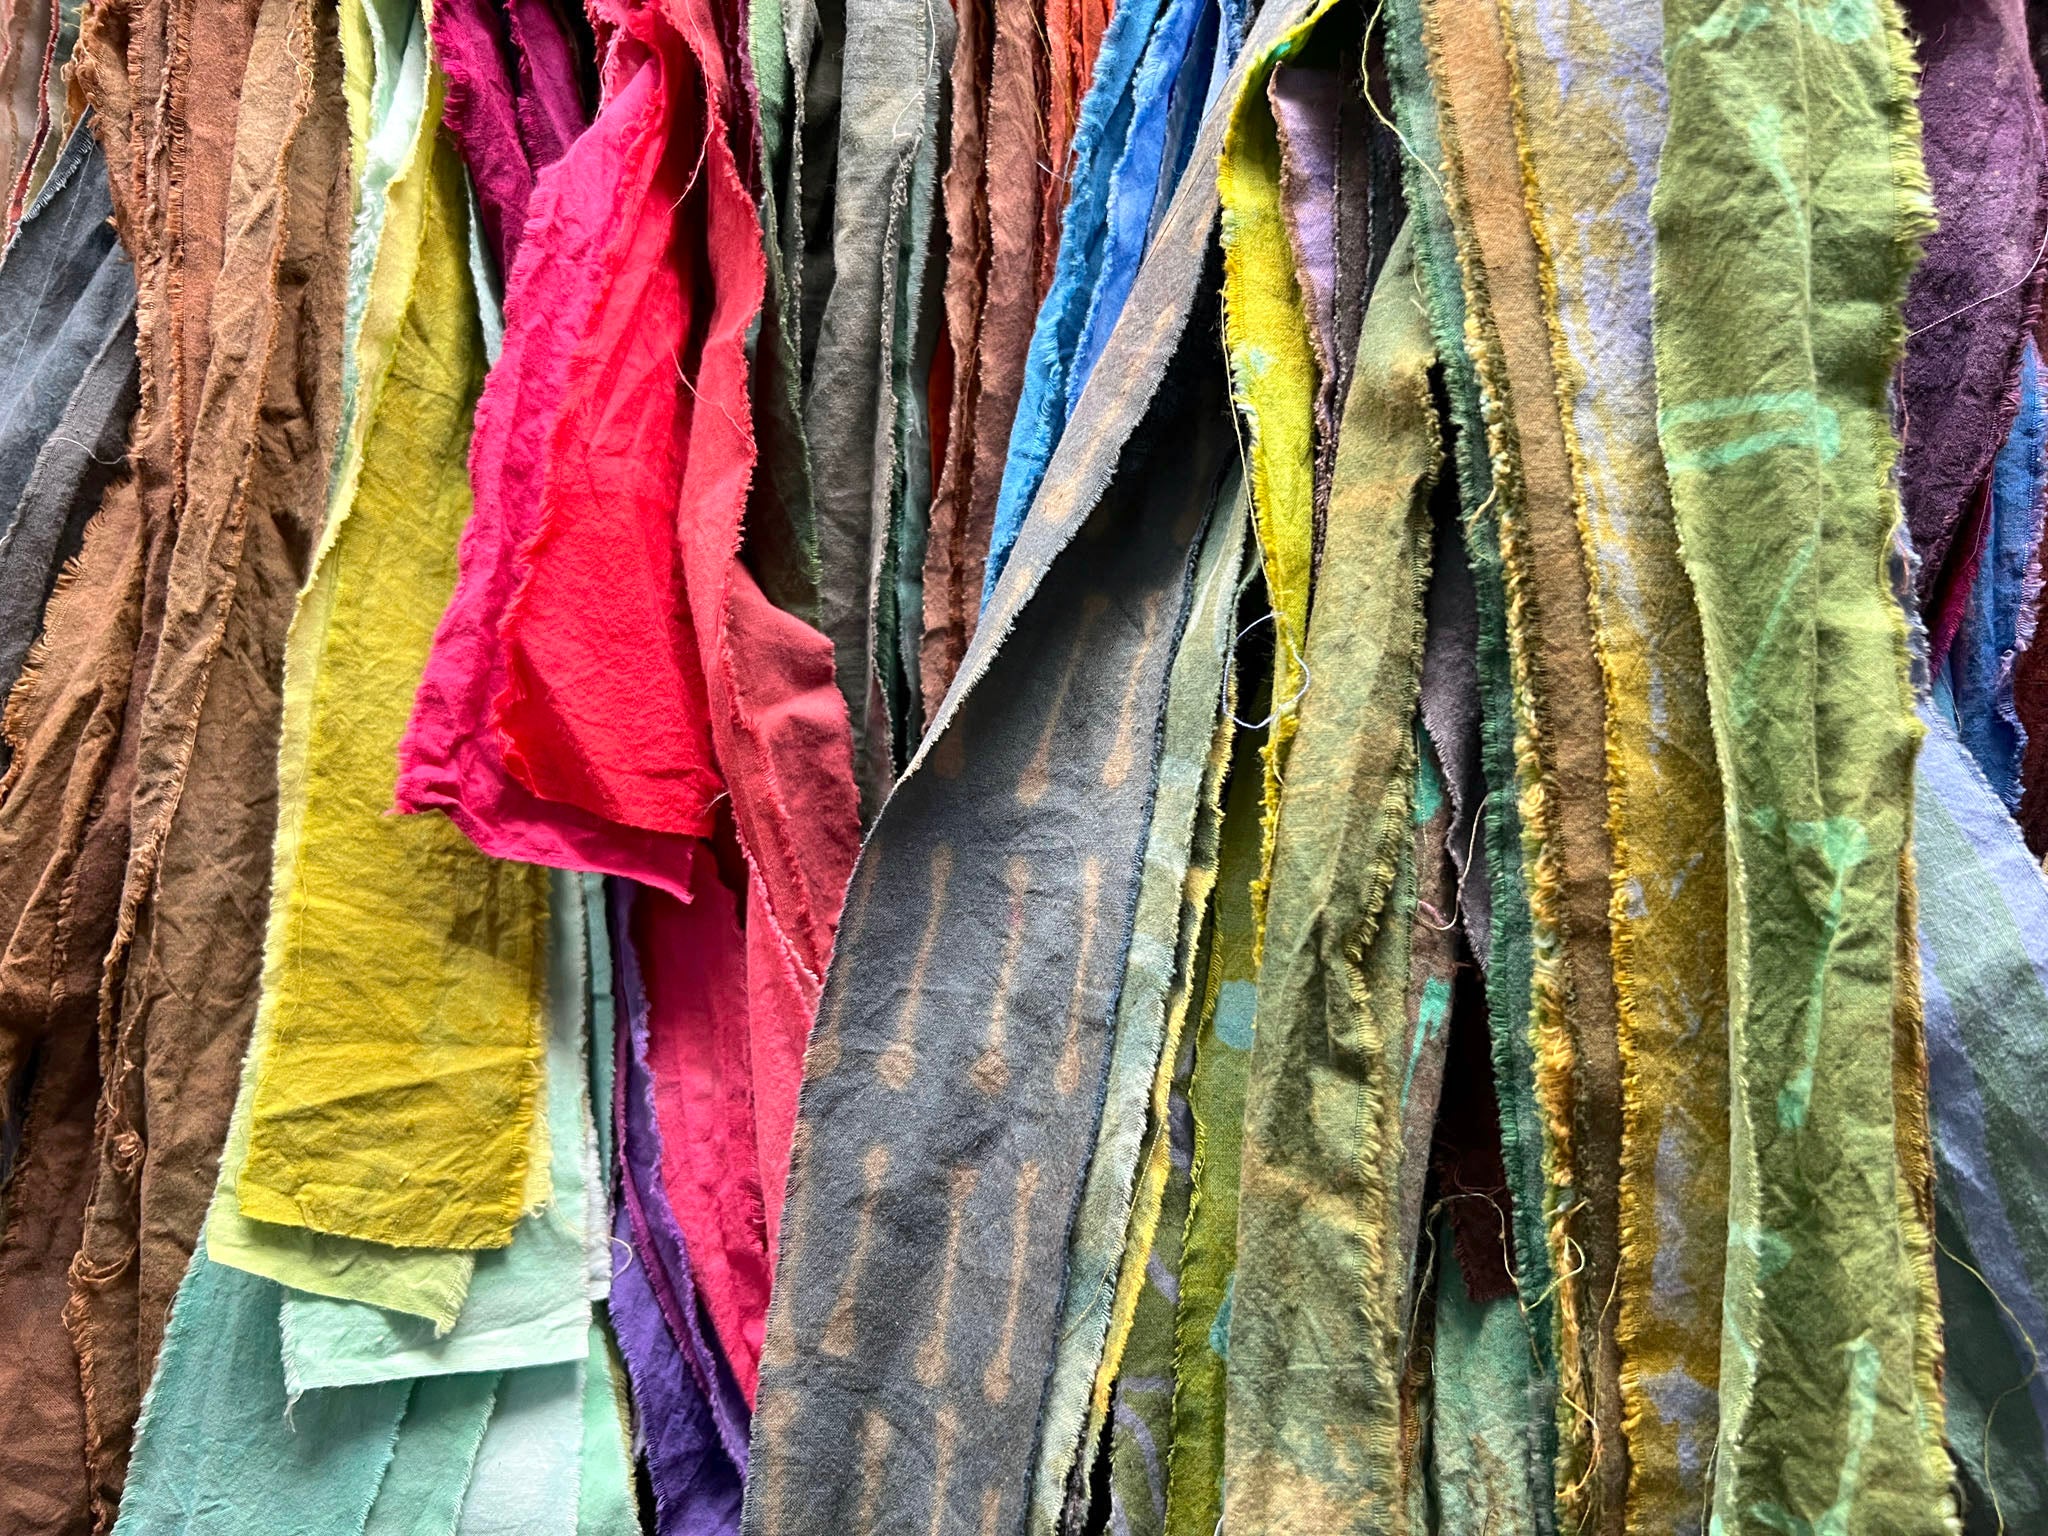 Fabric archive in the studio of Marcia Derse